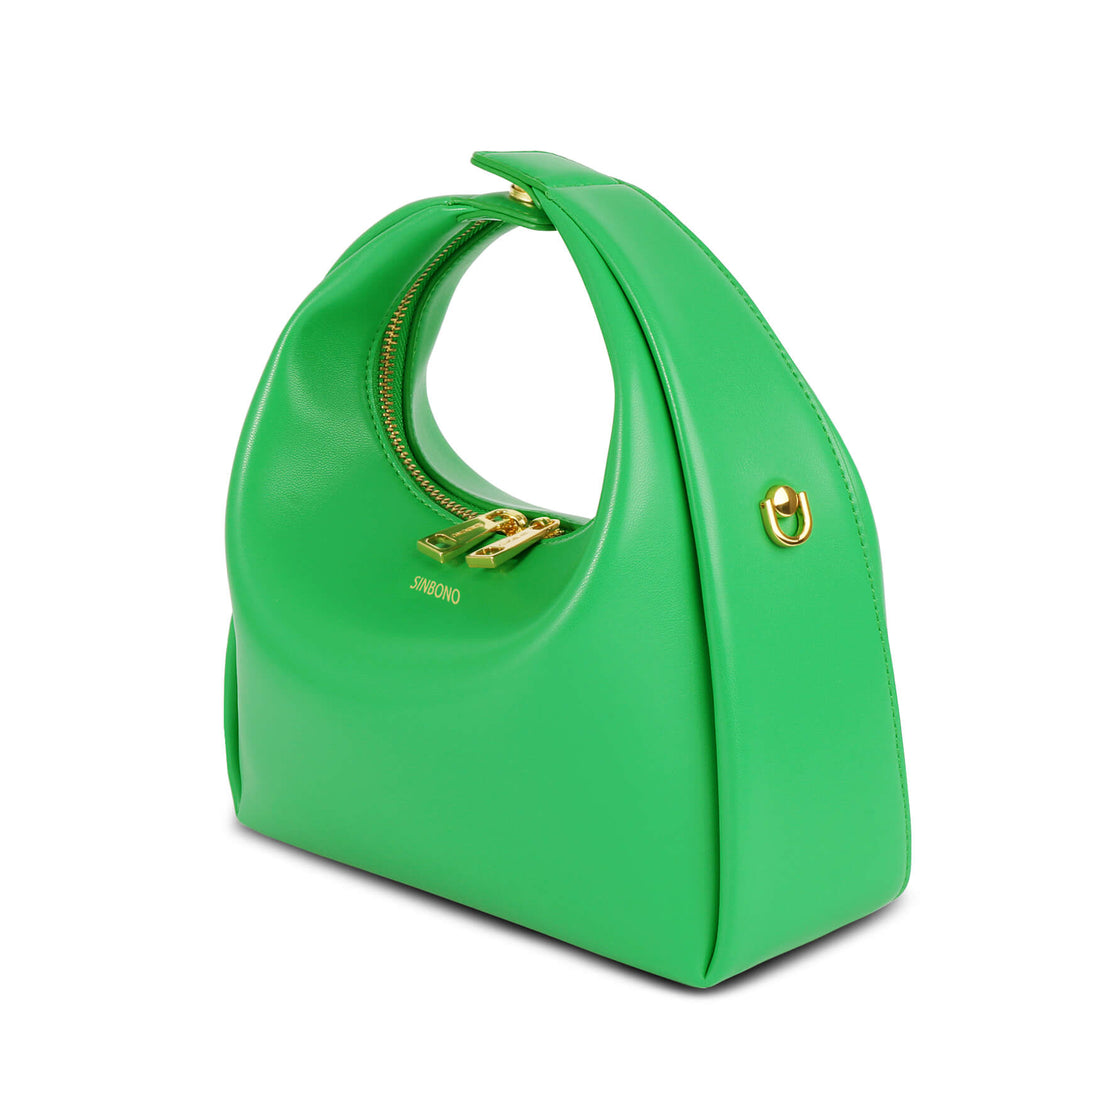 medium size handbags